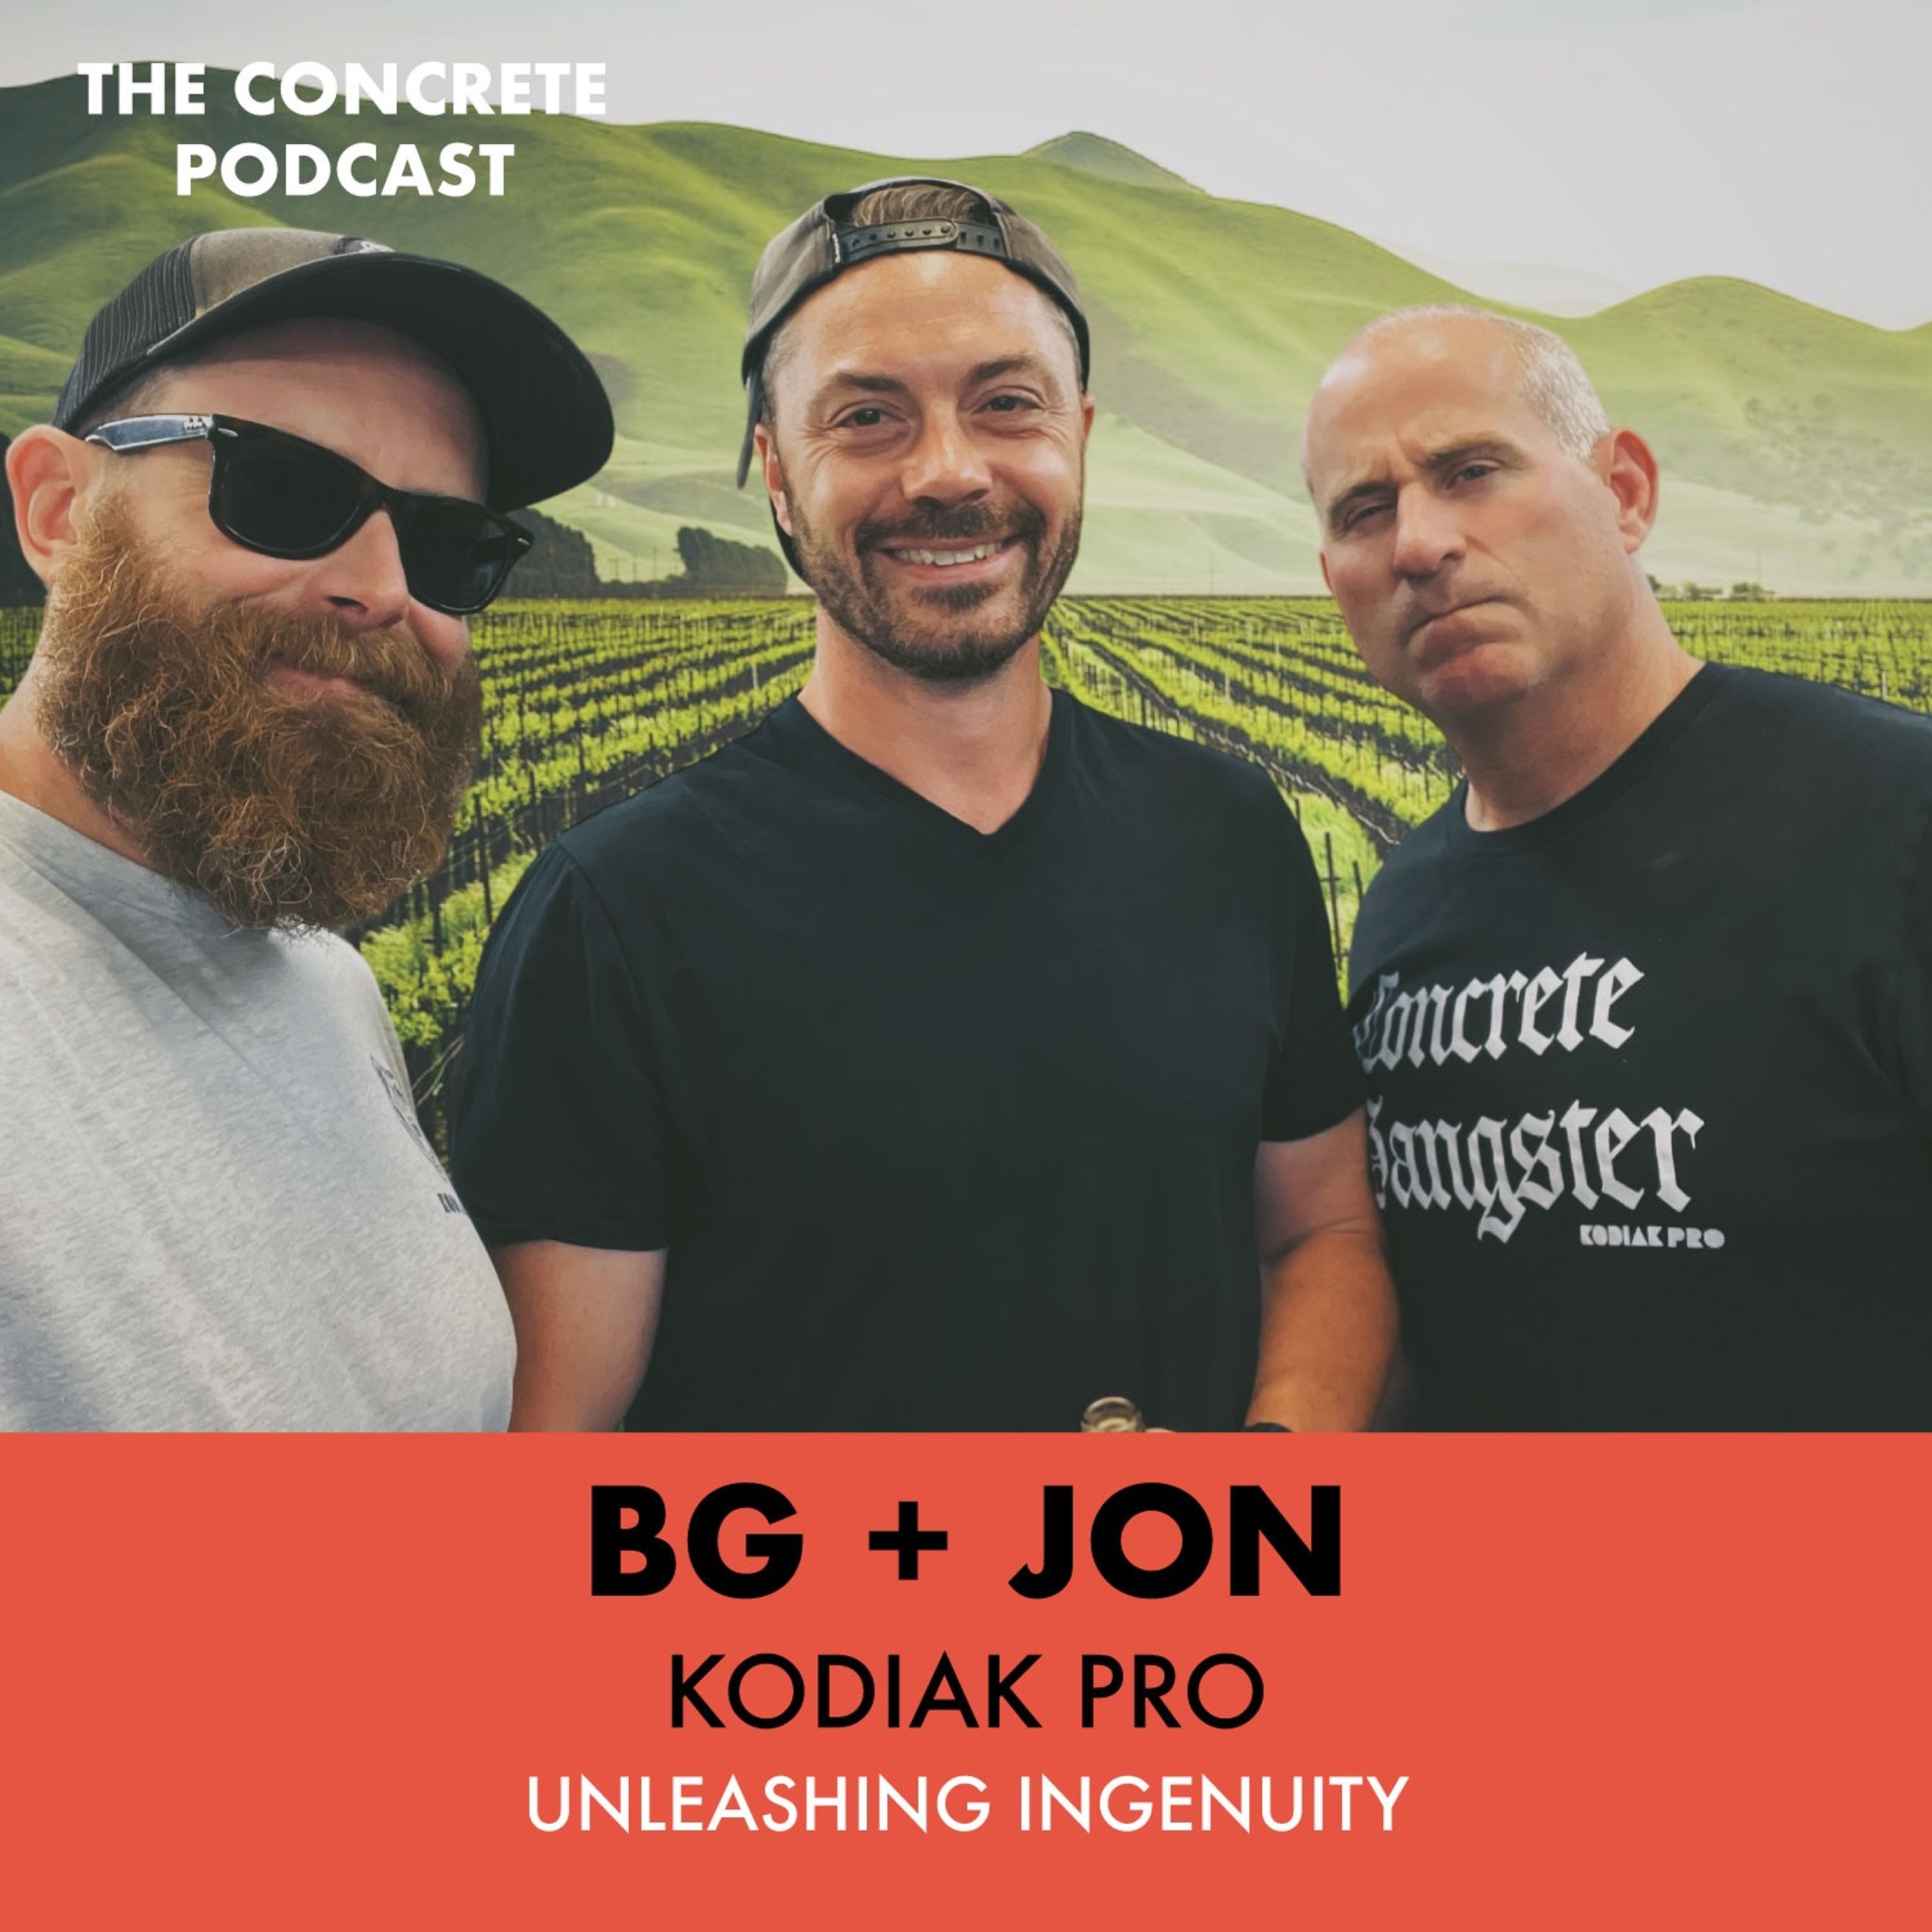 BG + Jon - Fostering Creativity: Unleashing Ingenuity Through Self-Imposed Constraints